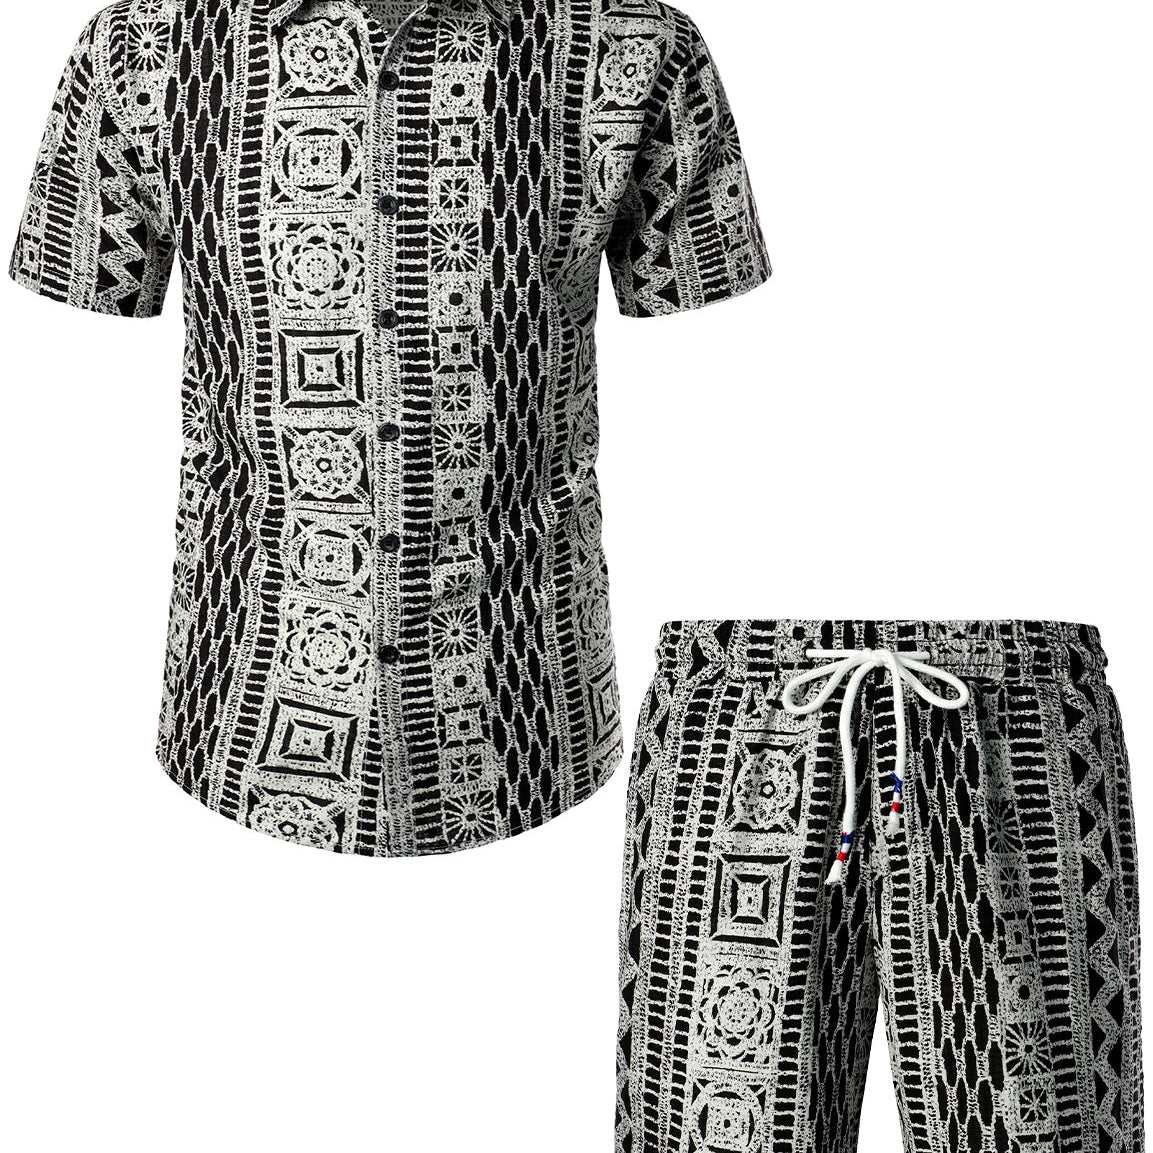 Men's Vintage Boho Short Sleeve Matching Shirt and Shorts Set